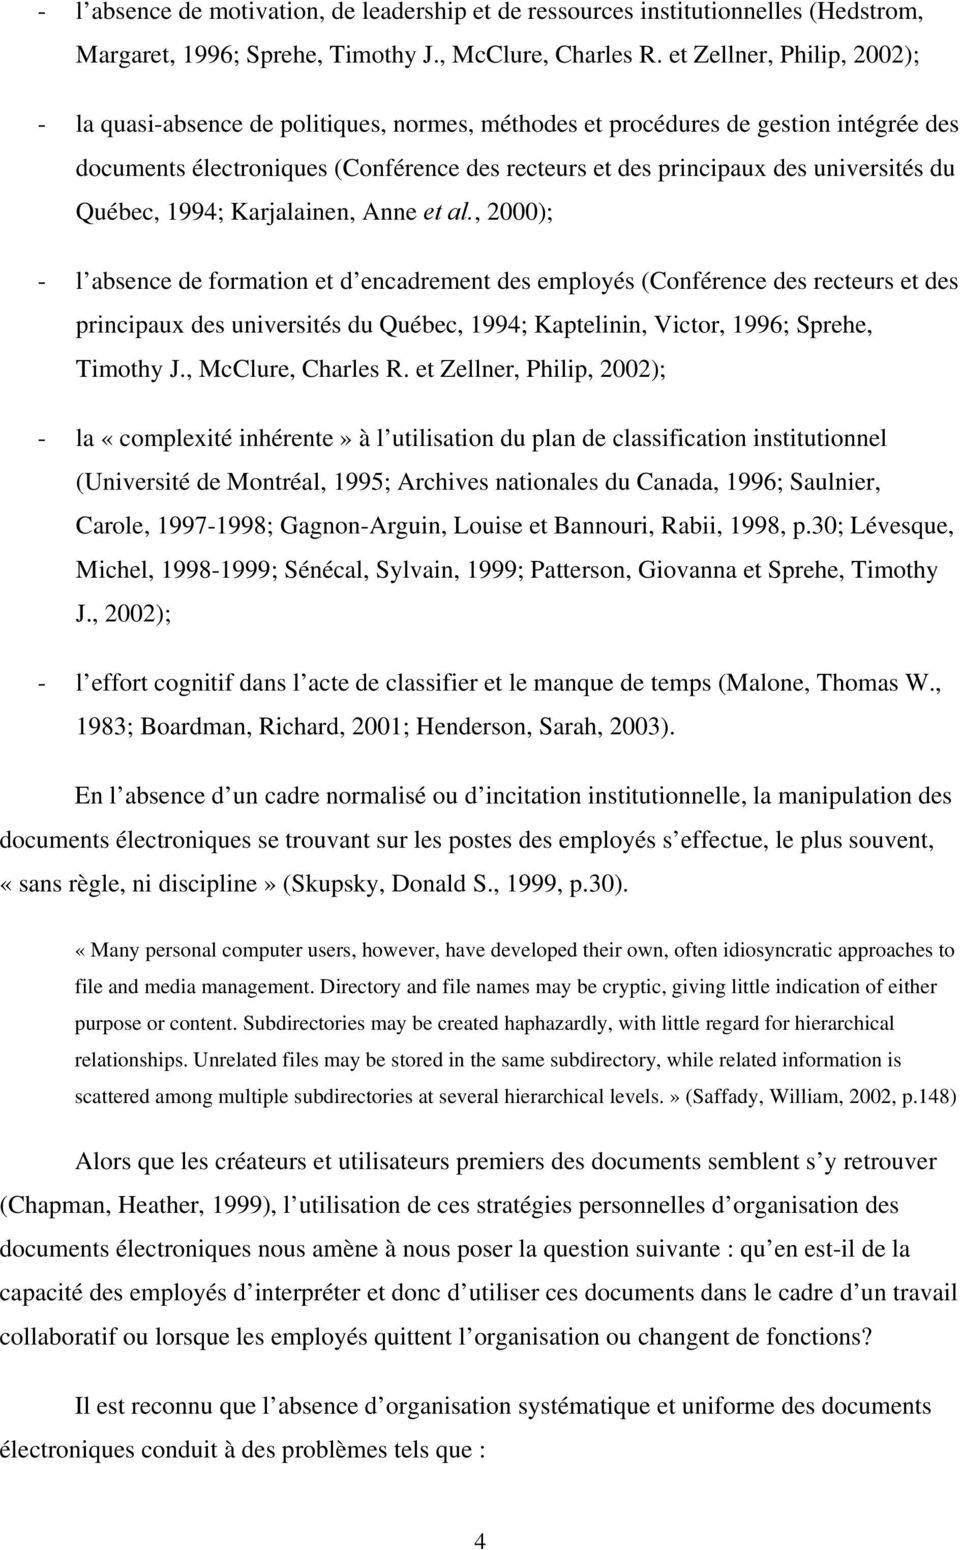 du Québec, 1994; Karjalainen, Anne et al.